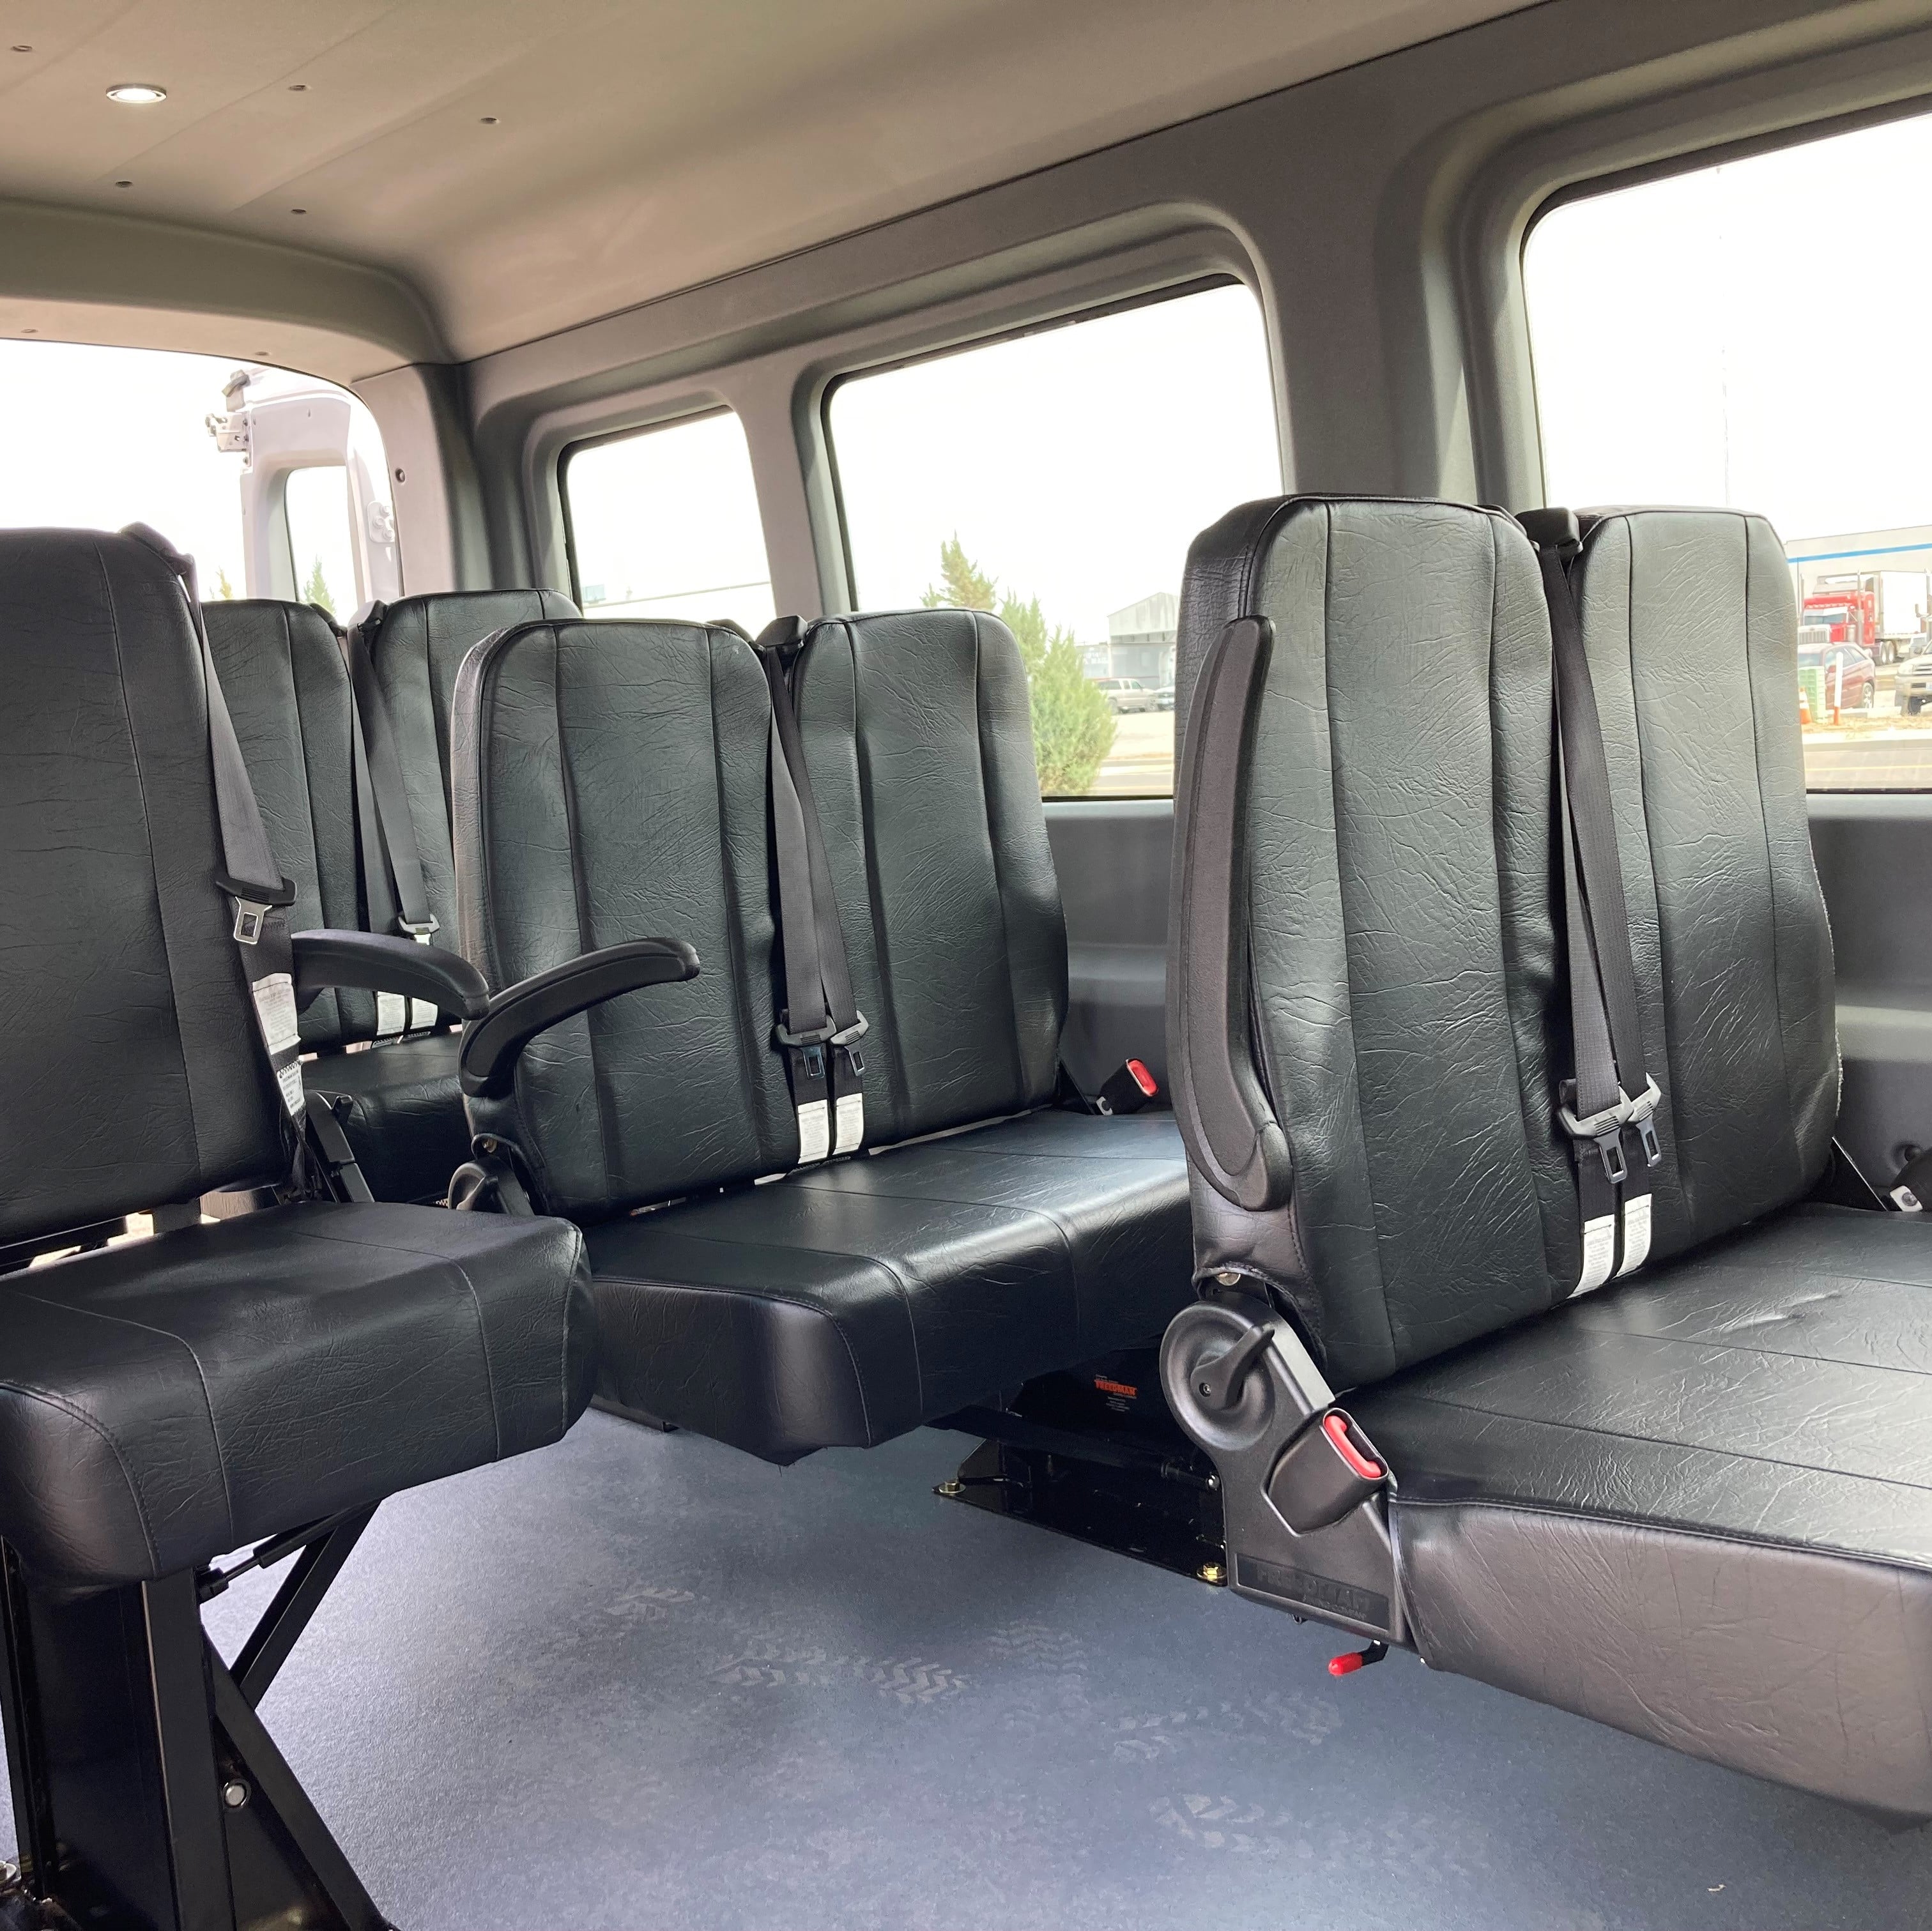 10 passenger van interior